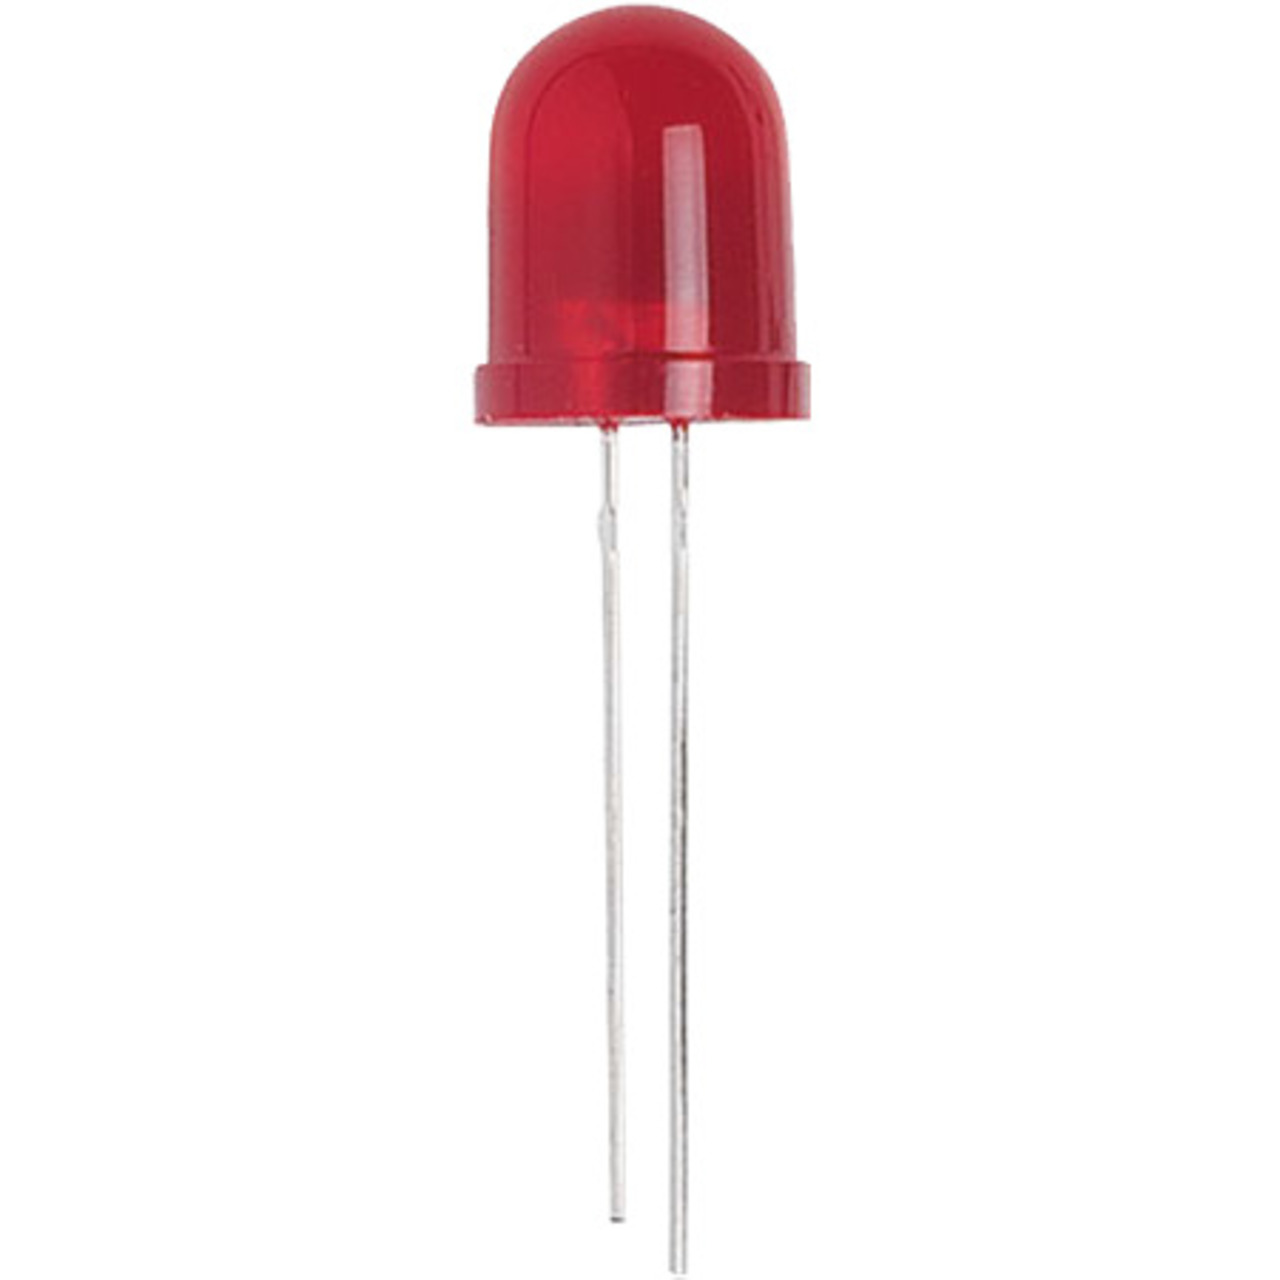 10x Superhelle LED 10 mm Rot unter Komponenten